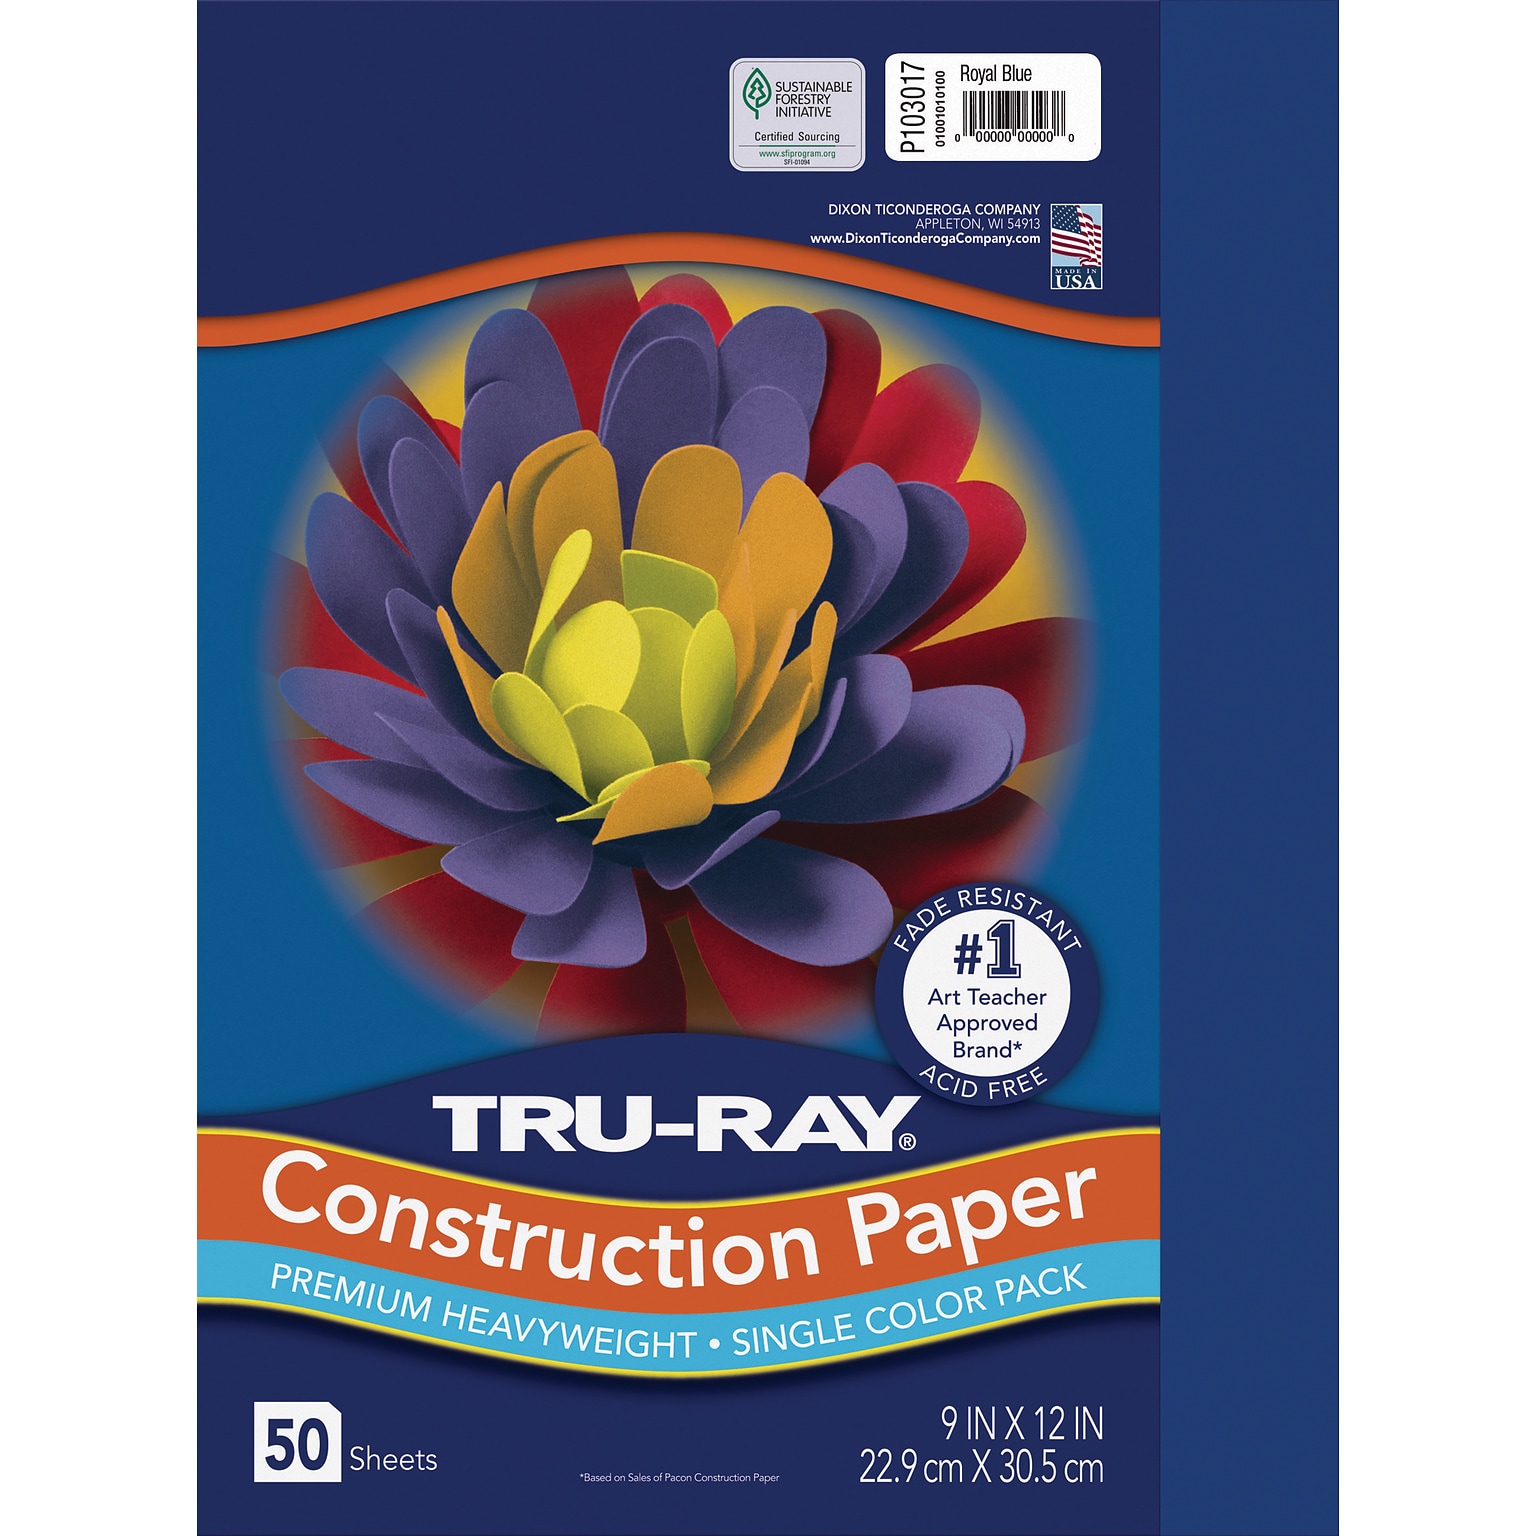 Tru-Ray 9 x 12 Construction Paper, Royal Blue, 50 Sheets (P103017)